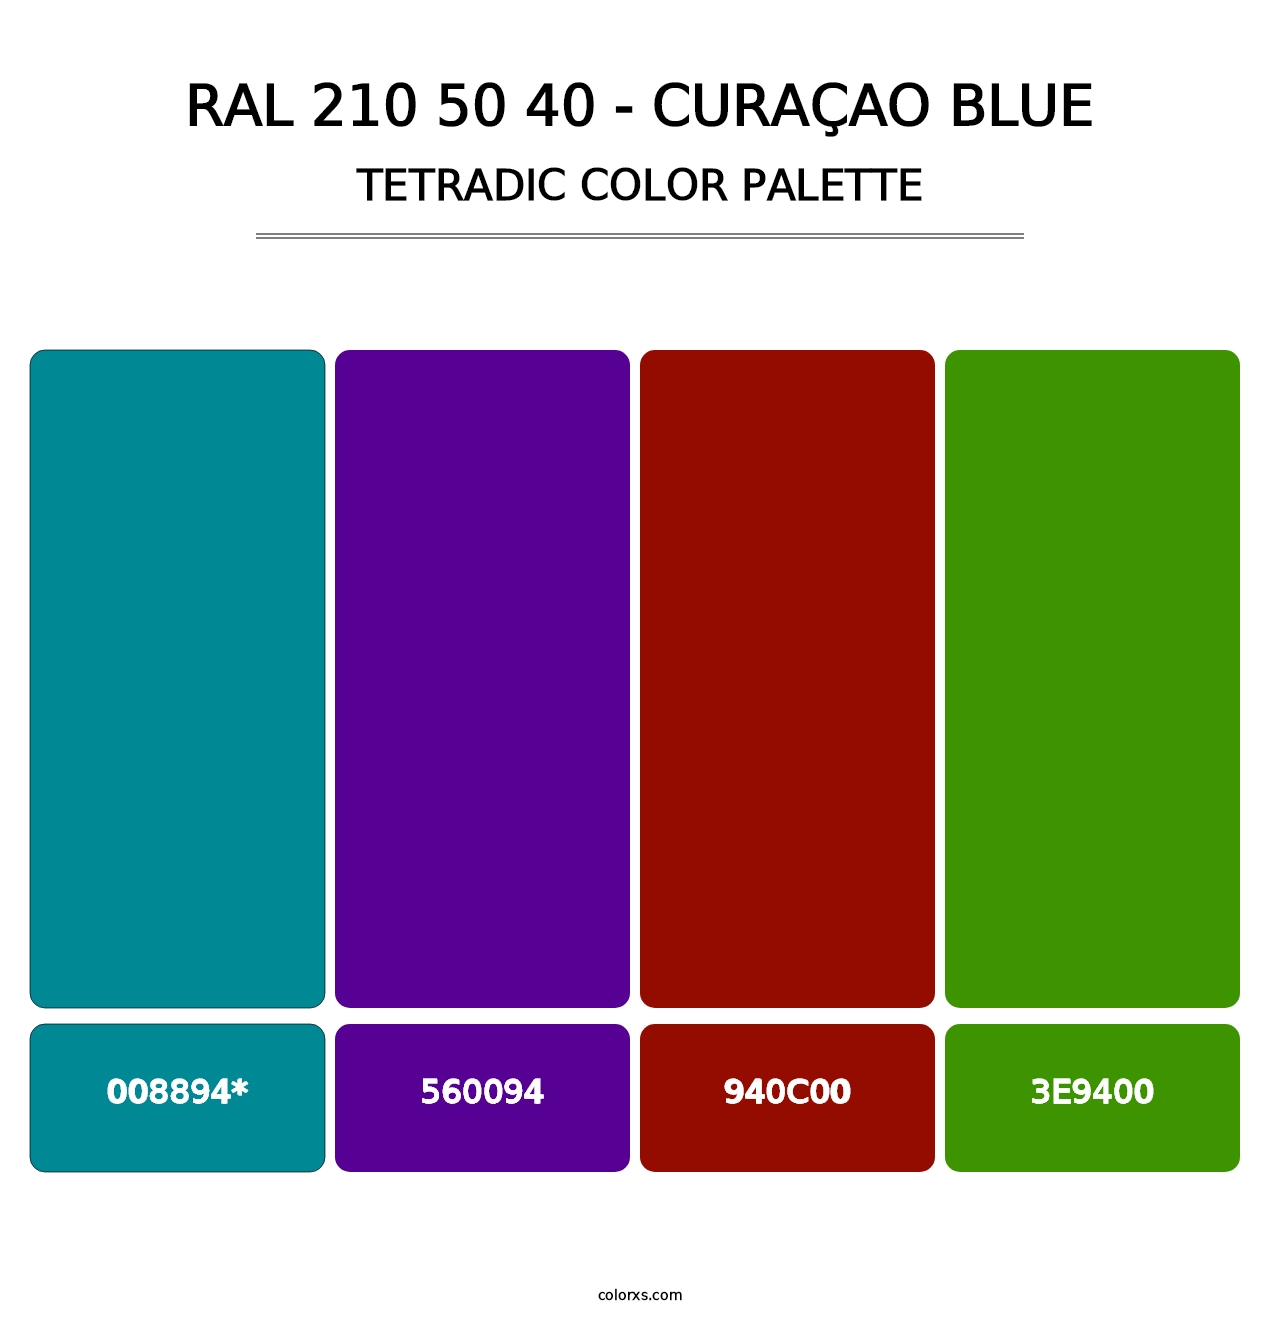 RAL 210 50 40 - Curaçao Blue - Tetradic Color Palette